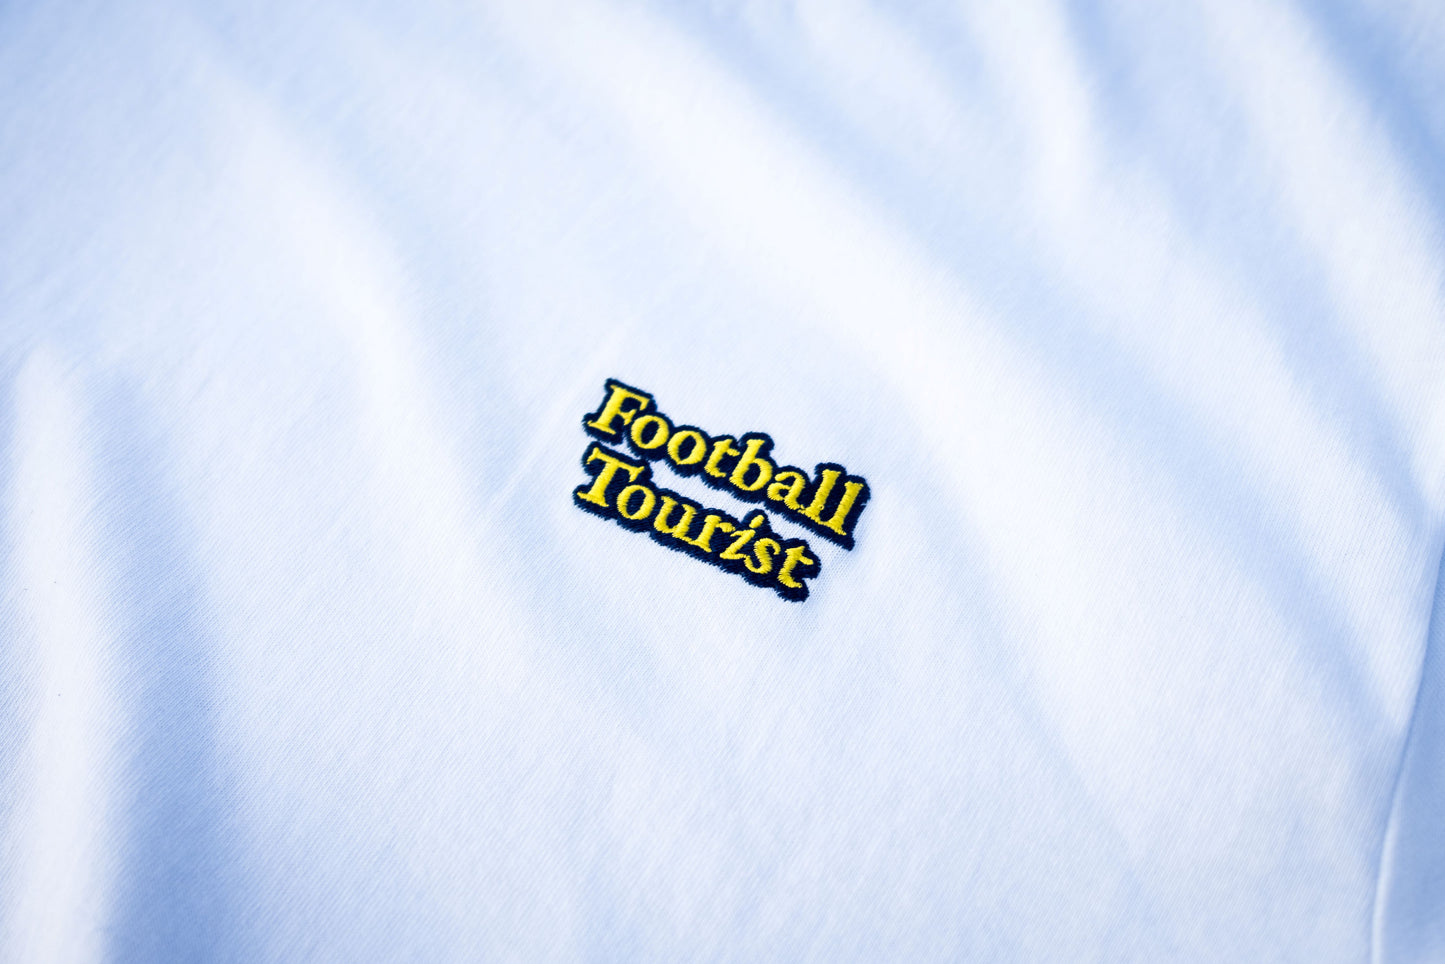 ”FOOTBALL TOURIST” T-shirts with CITY BOYS F.C.